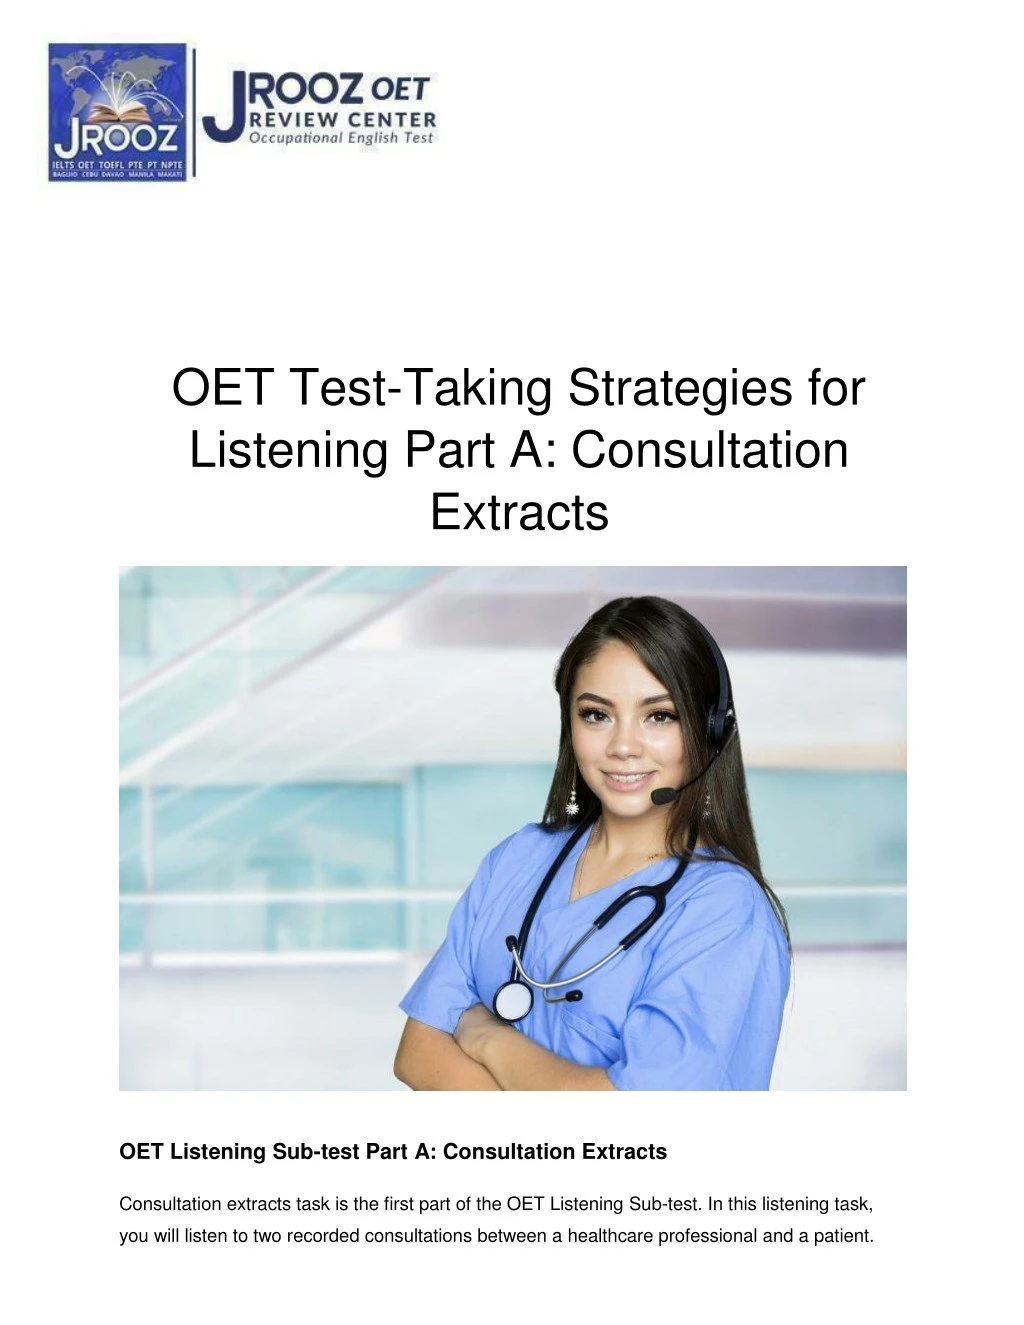 oet test taking strategies for listening part